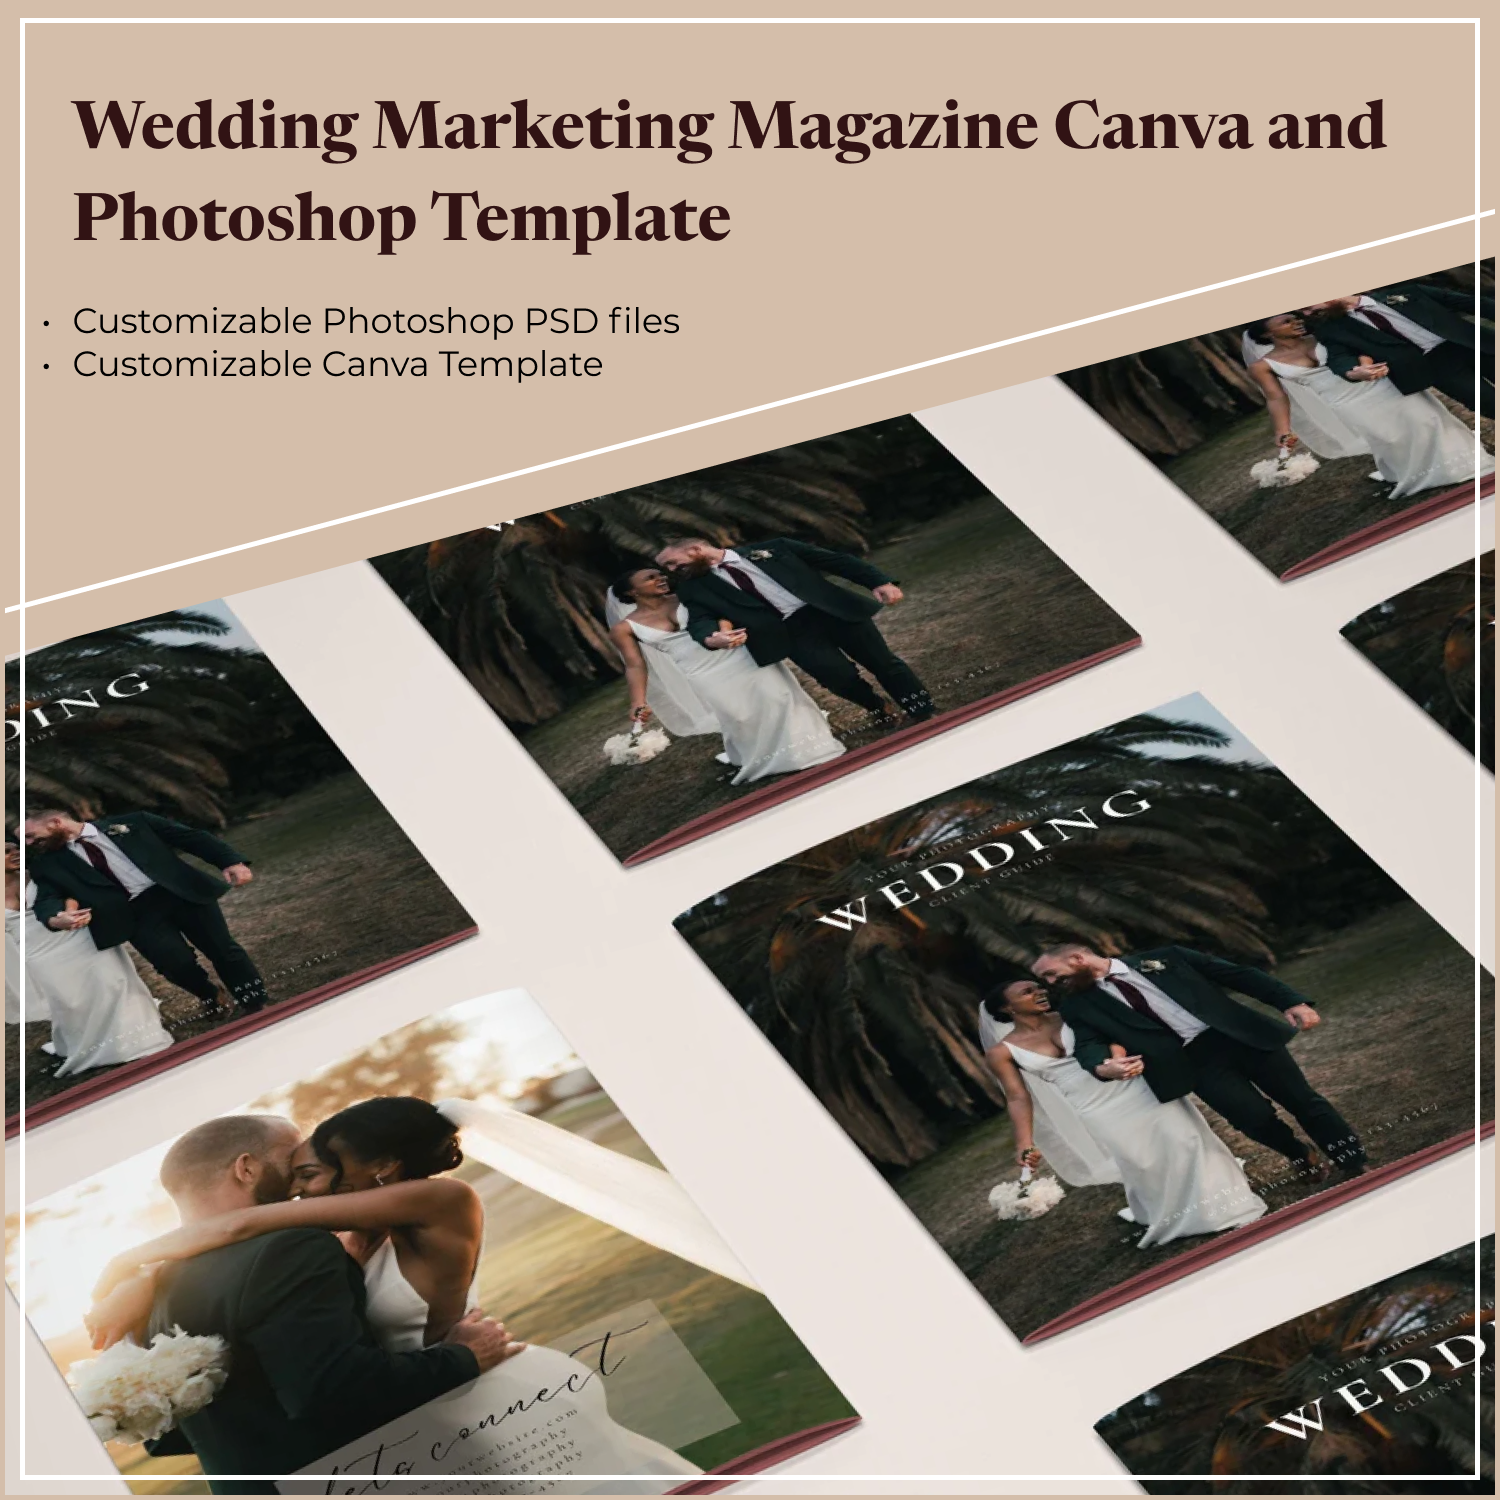 Prints of wedding marketing magazine canva and photoshop template.